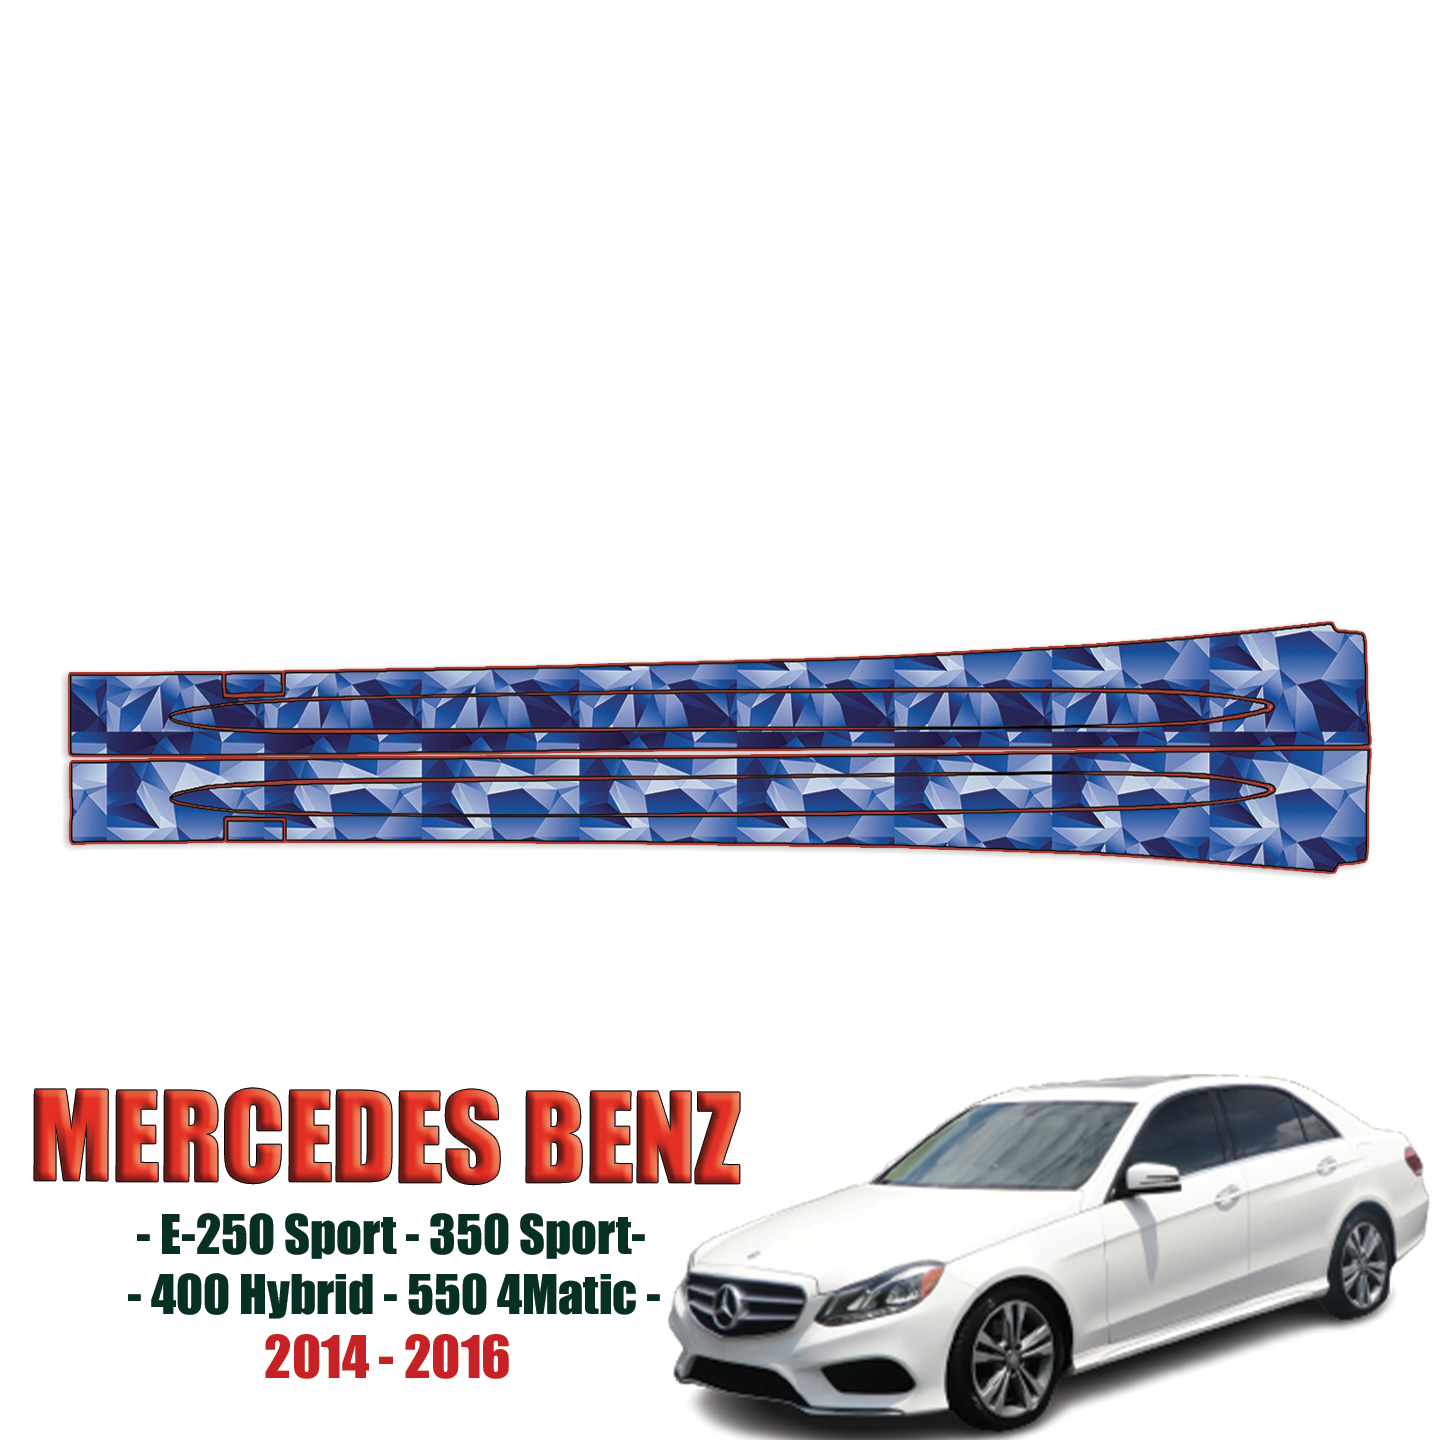 2014-2016 Mercedes Benz E-250 Sport, E-350 Sport, 400 Hybrid, 550 4matic Precut Paint Protection Kit – Rocker Panels